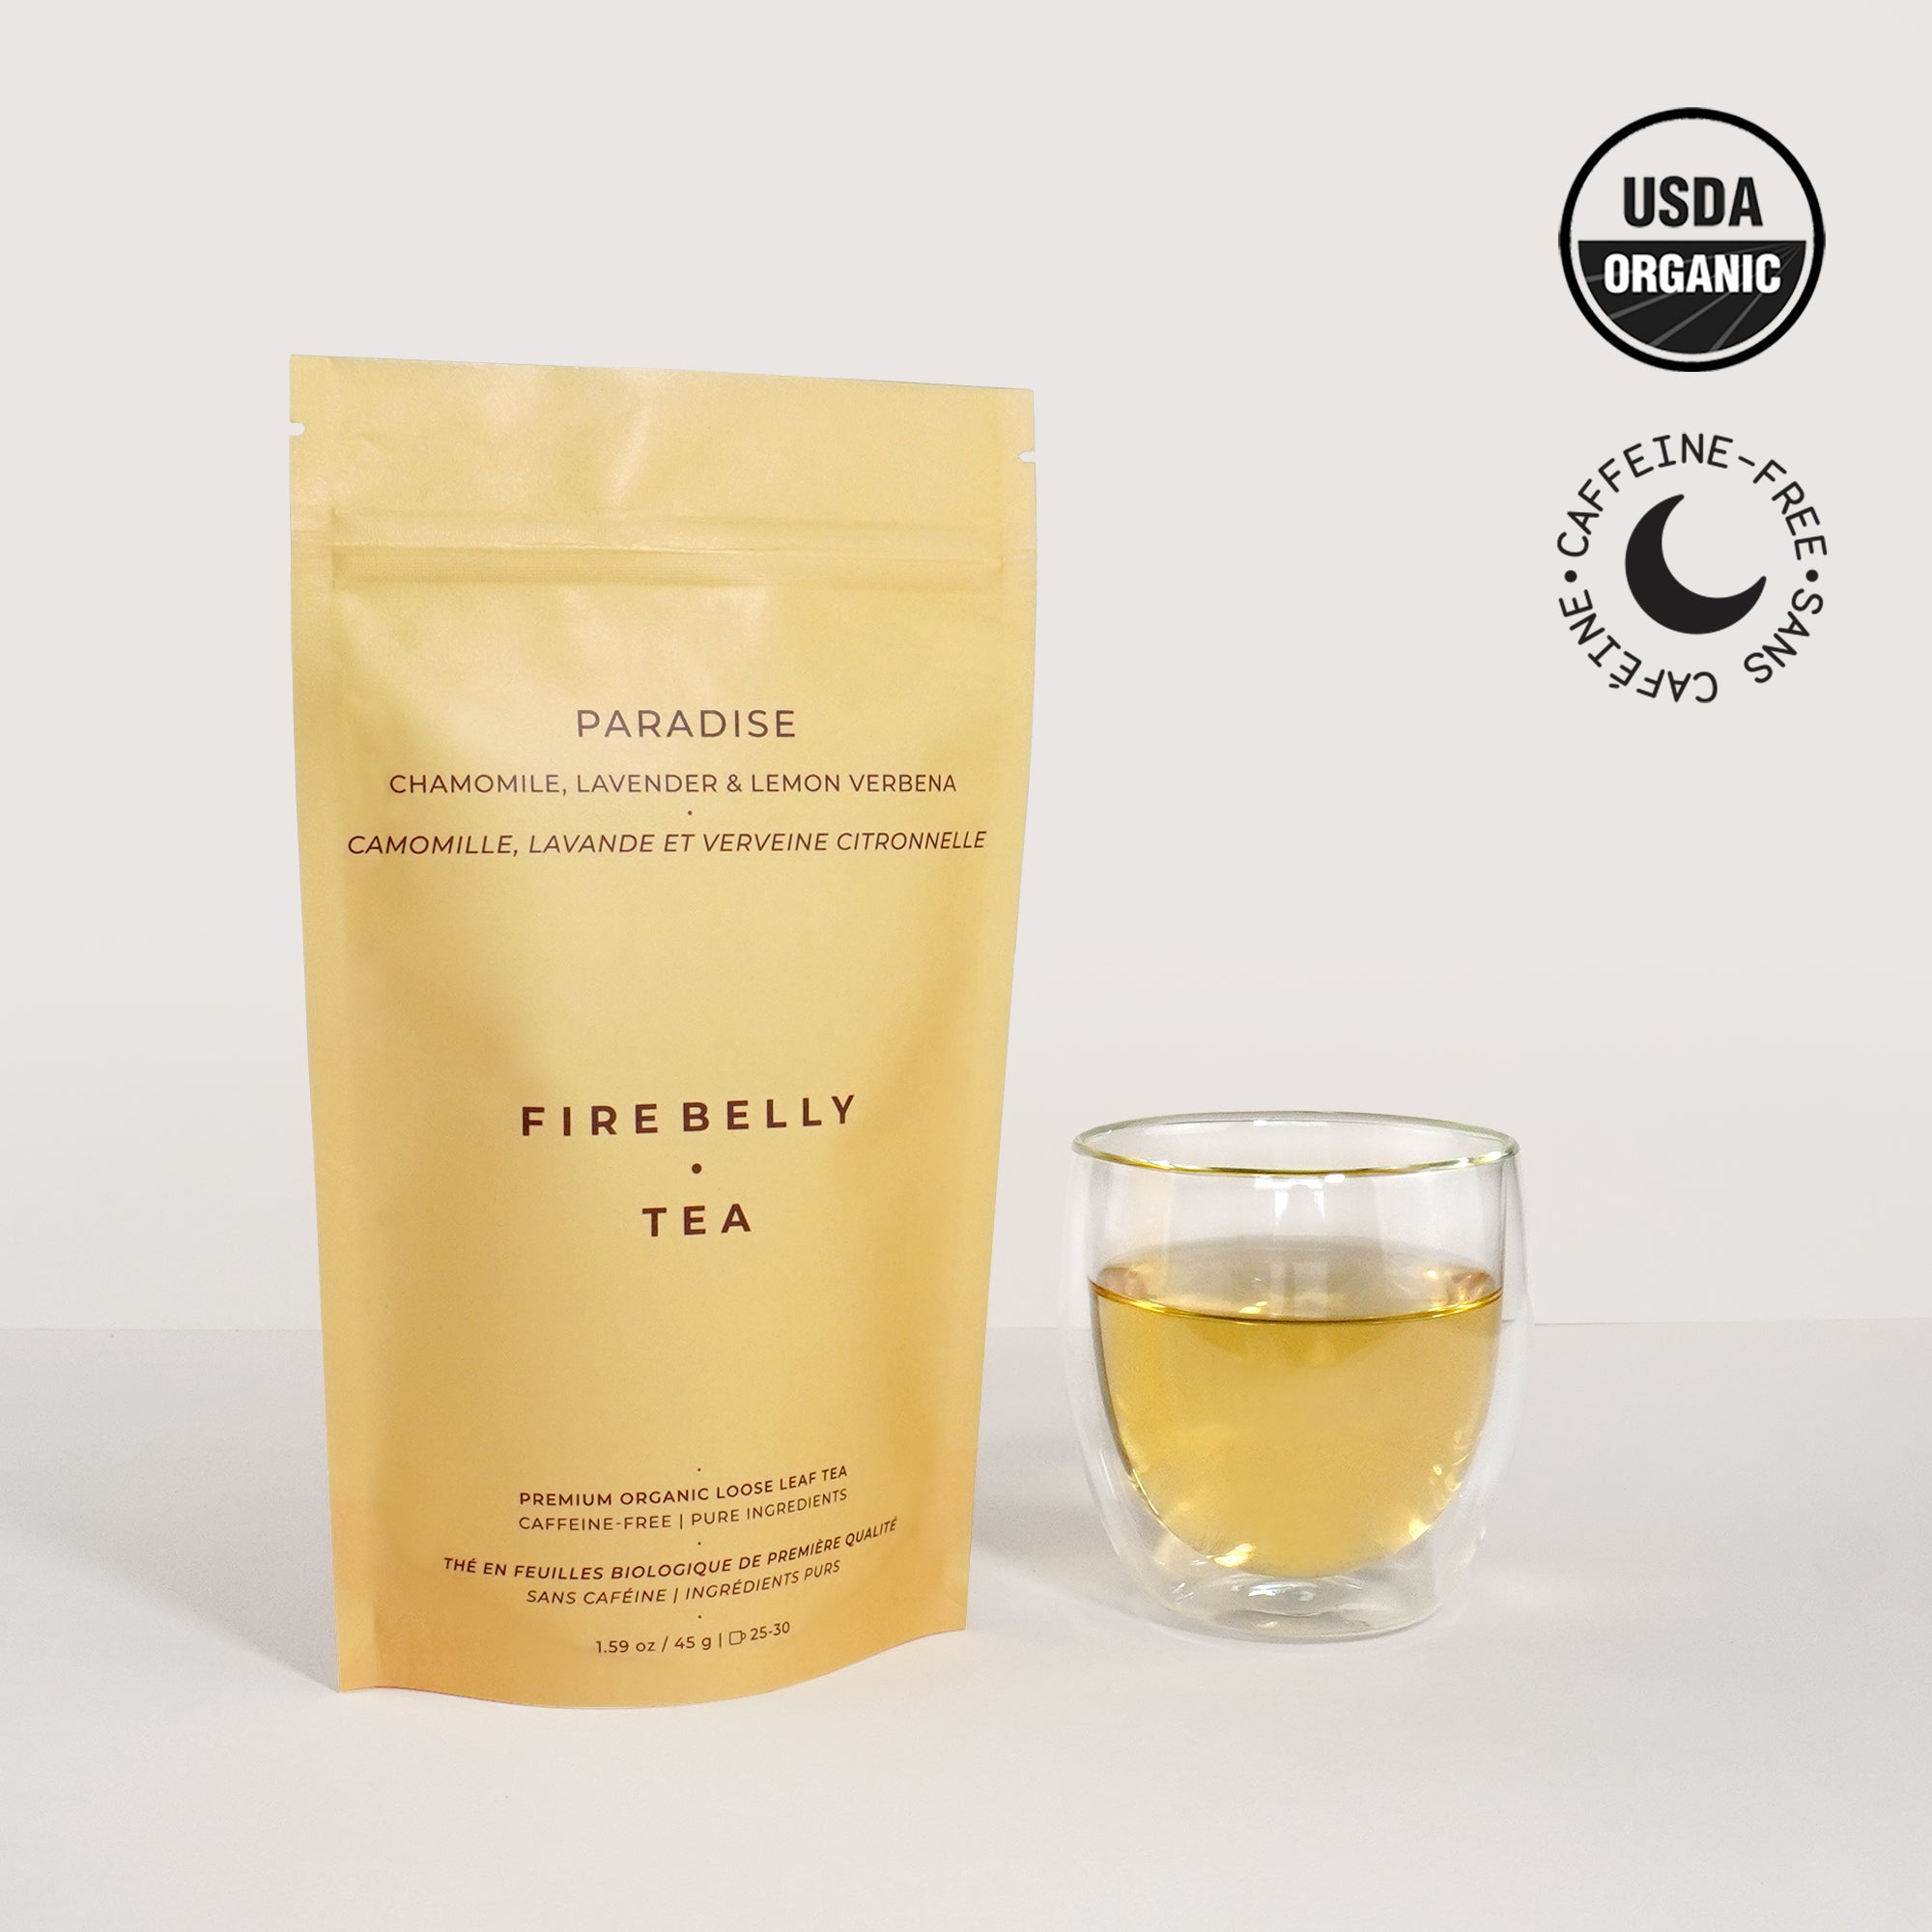 Paradise - Firebelly Tea